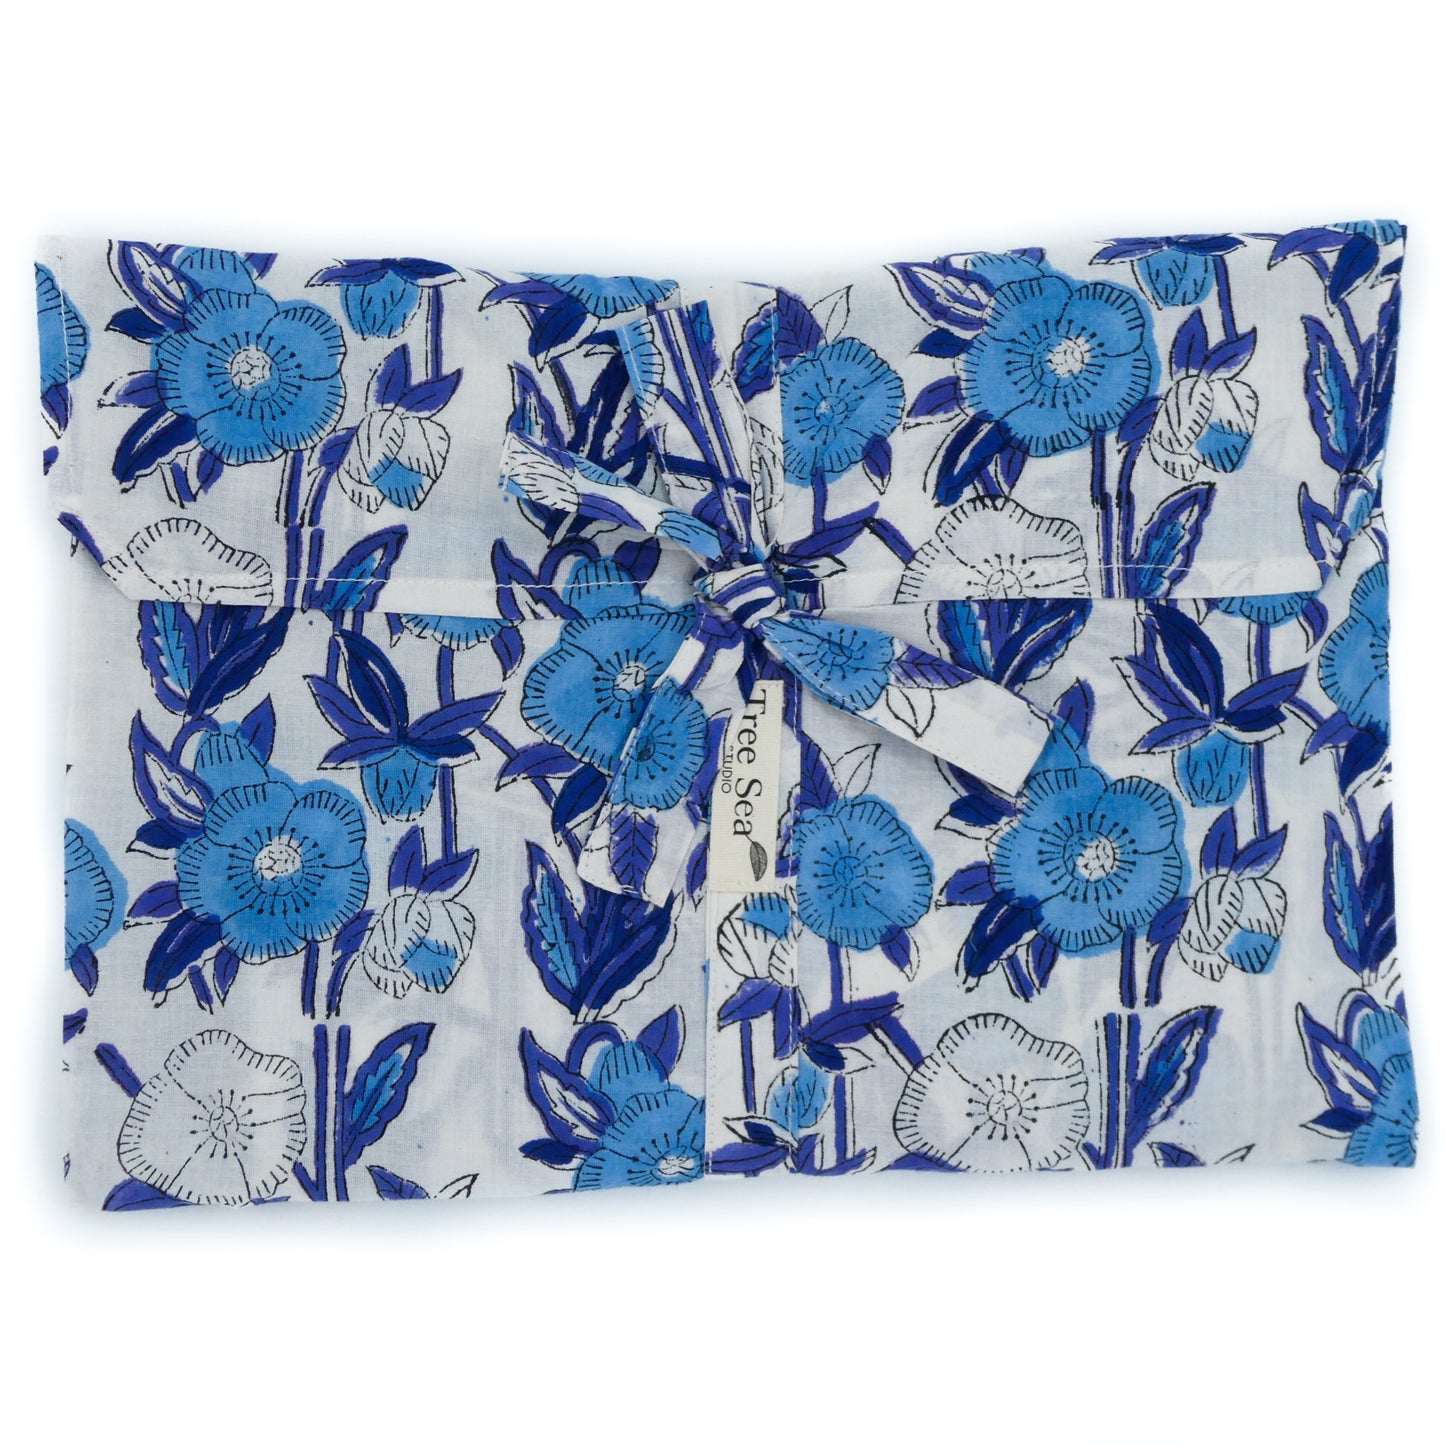 pyjama travel pouch blue white floral design